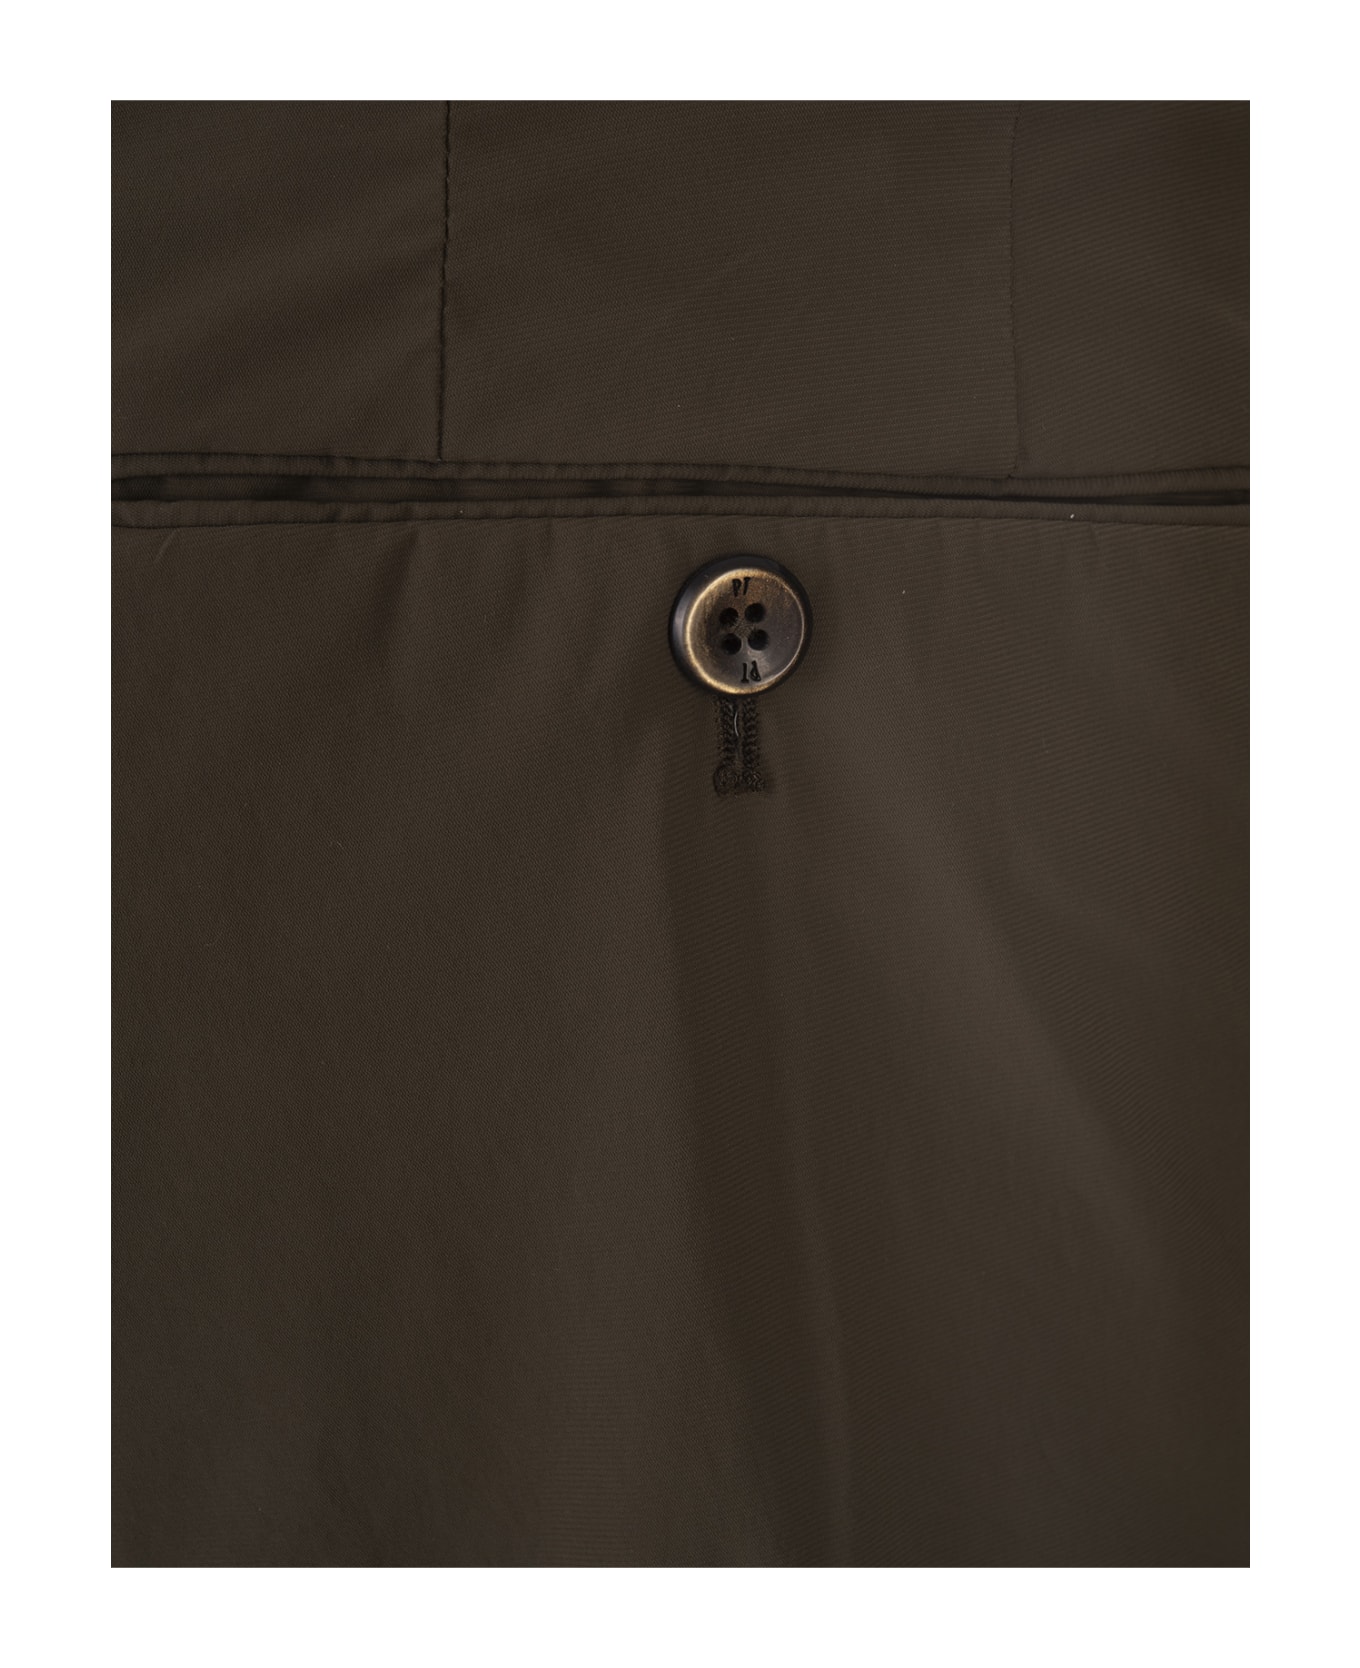 PT Torino Brown Stretch Cotton Shorts - Brown